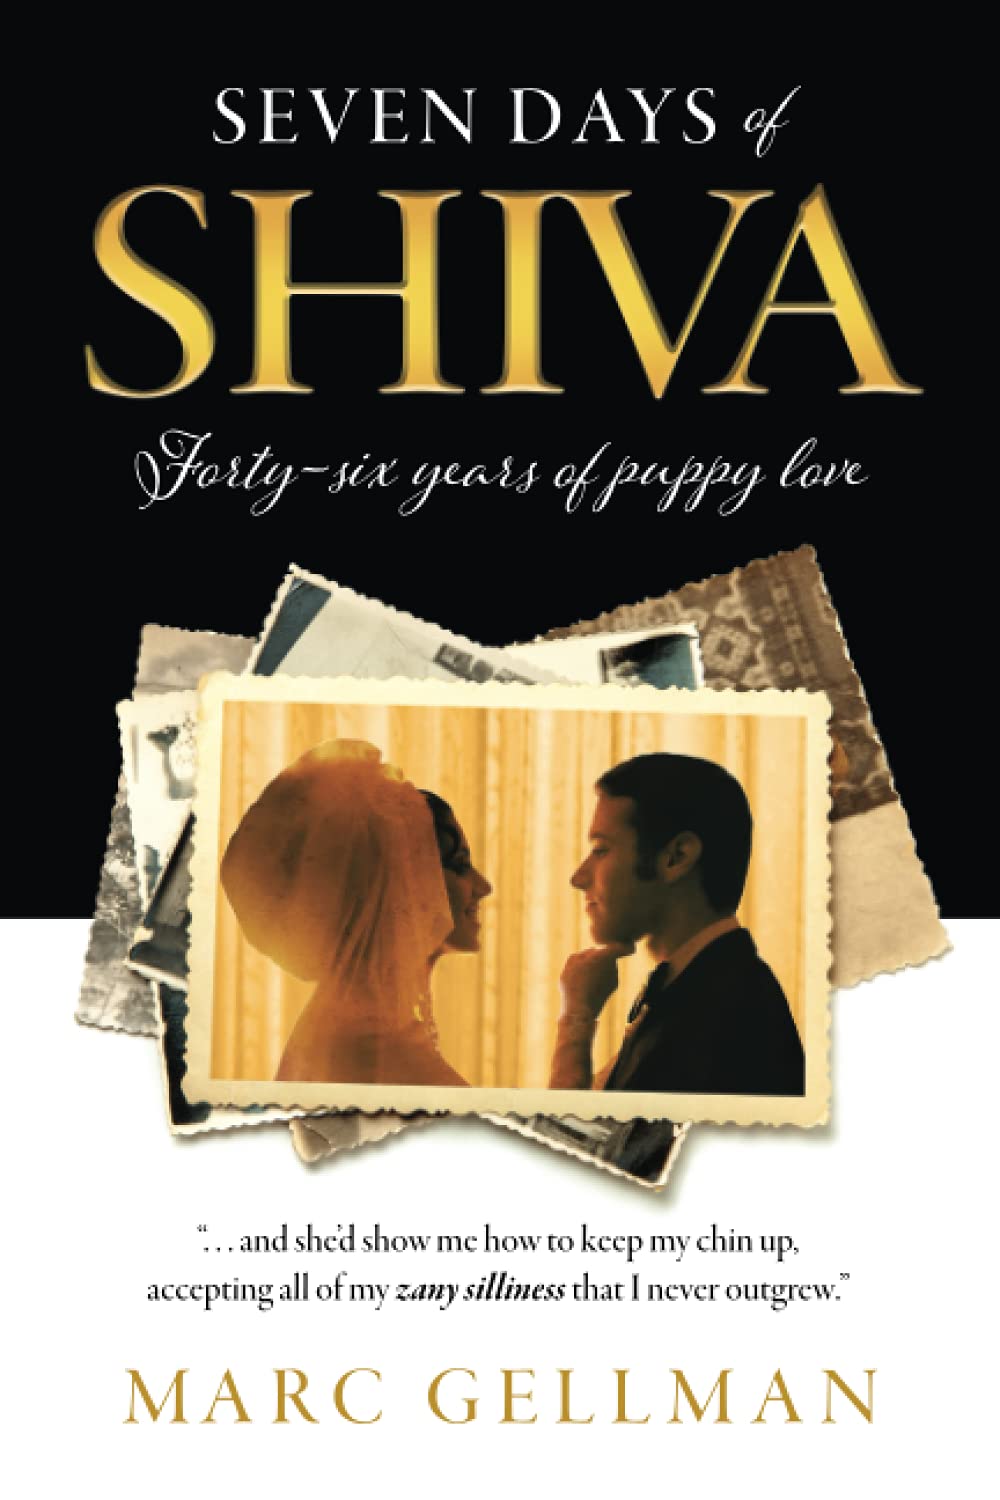 Seven Days of SHIVA by Marc Gellman